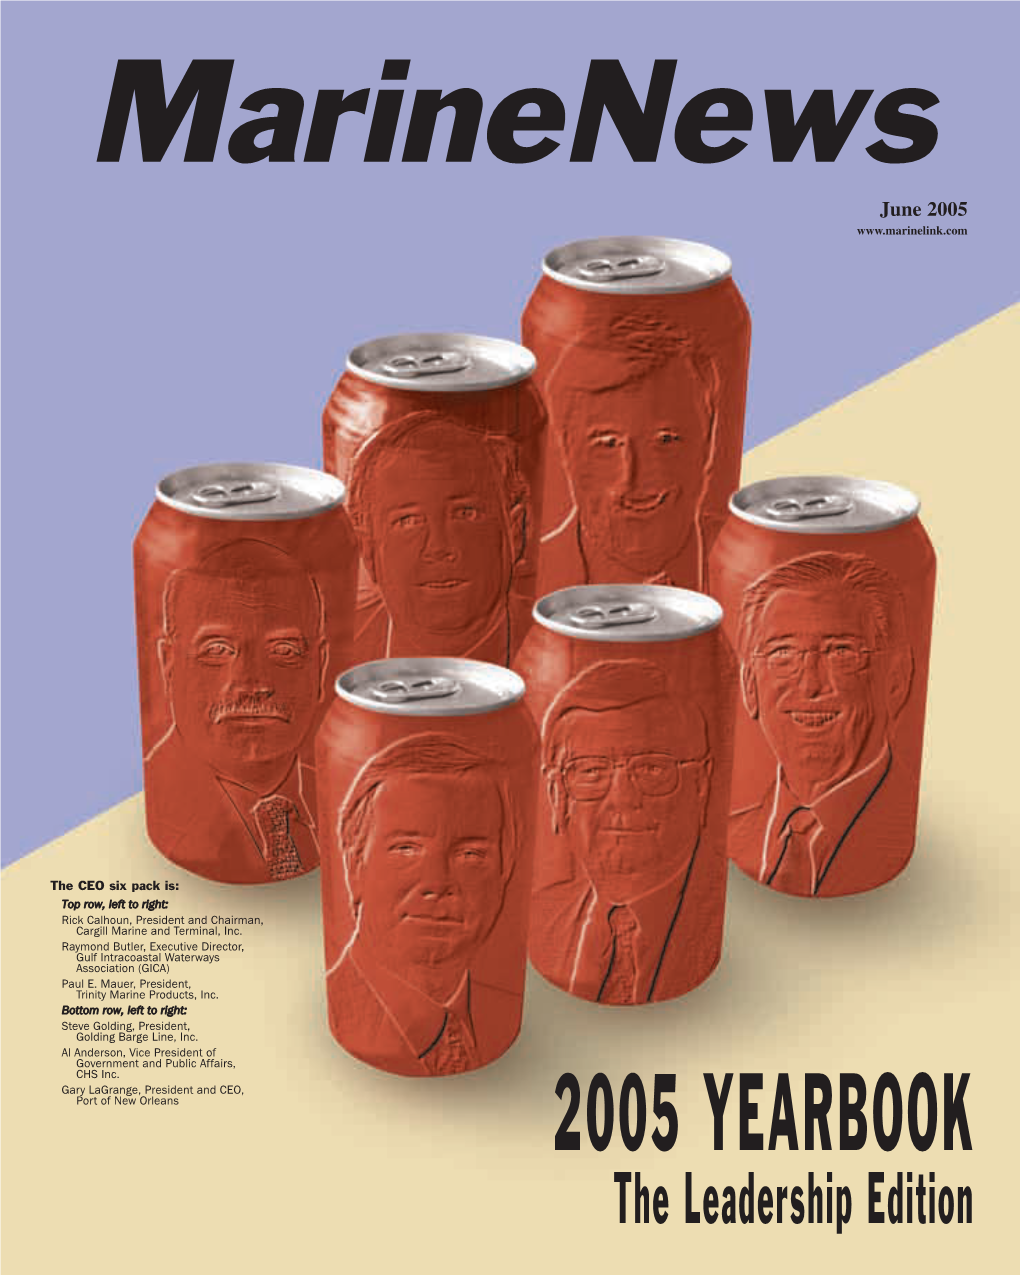 JUNEMN2005 COVER 1.Qxd 5/26/2005 8:33 AM Page 1 Marinenews June 2005